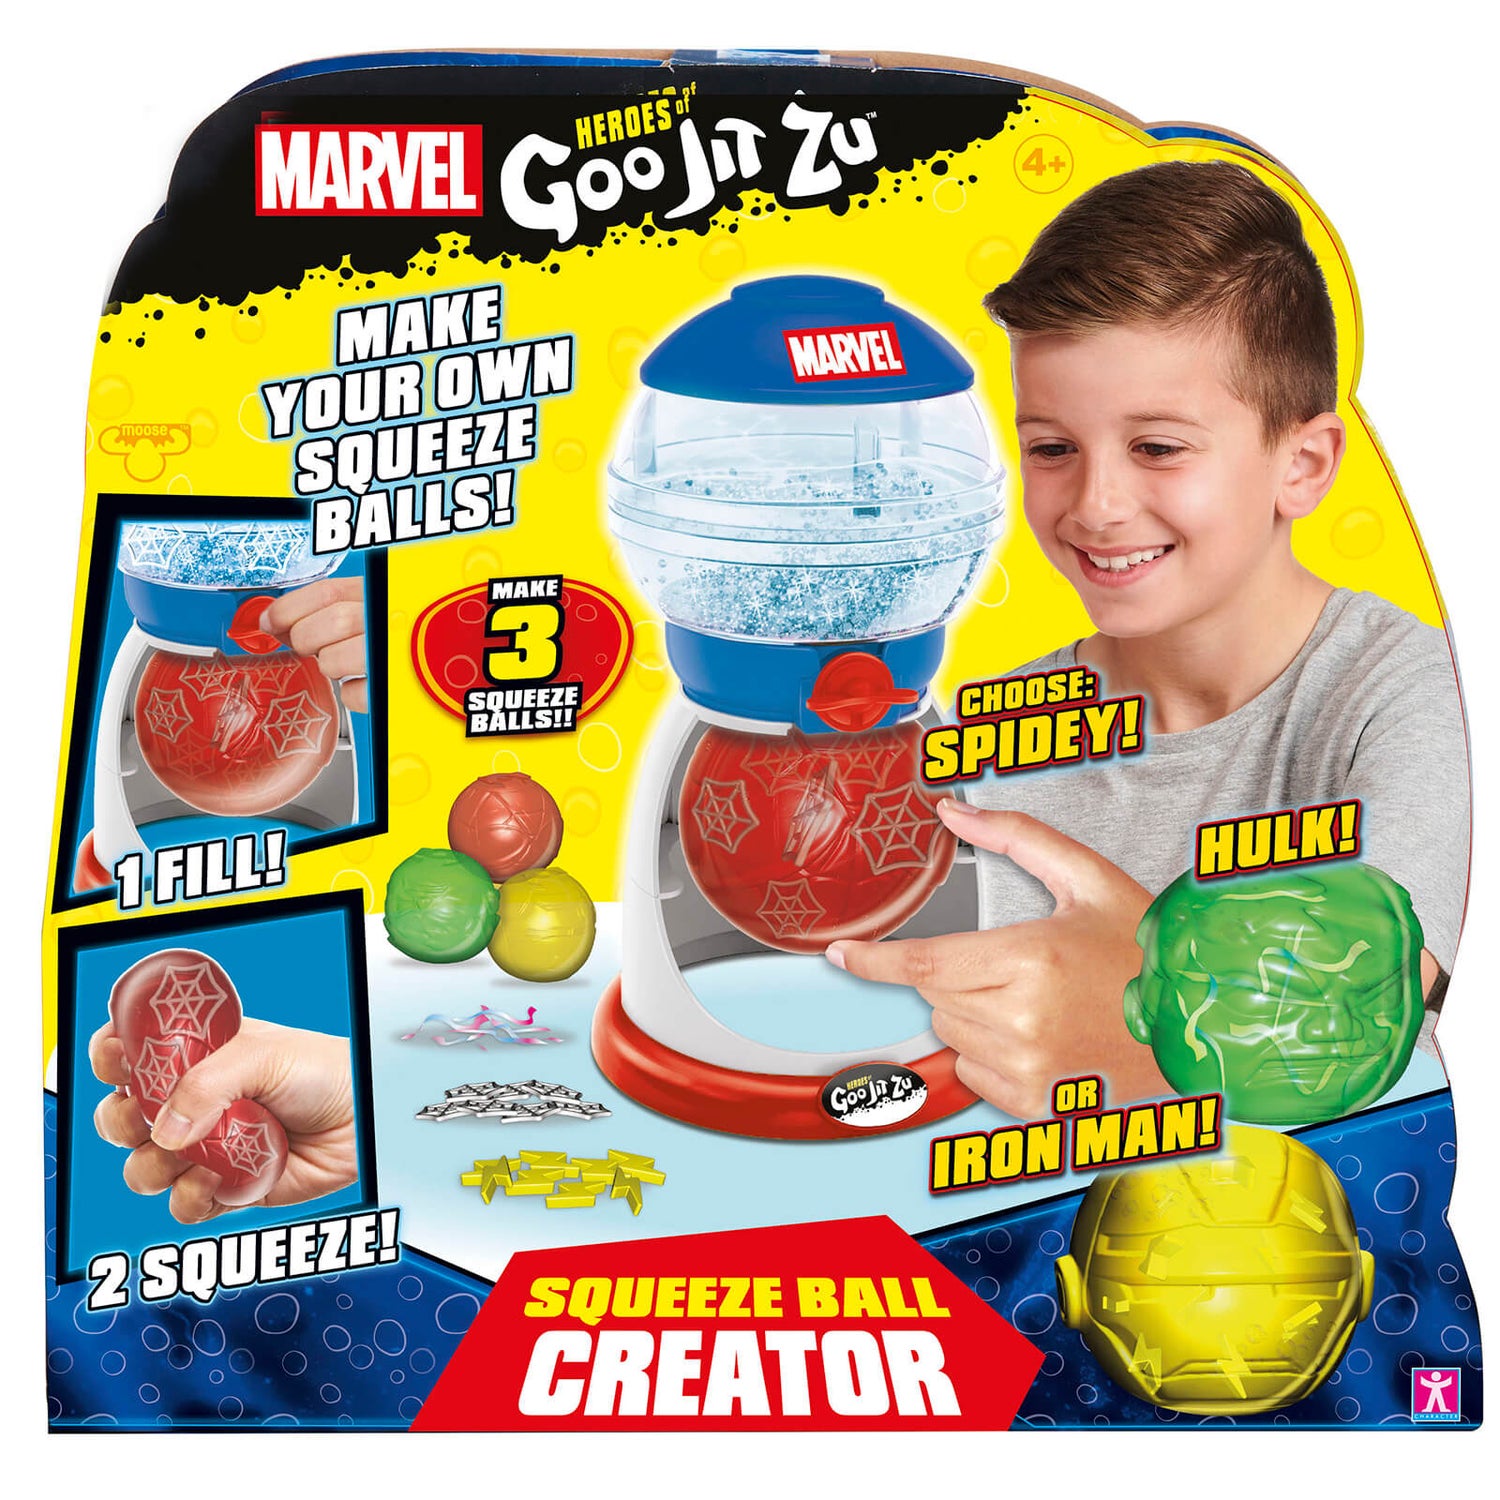 Heroes of Goo Jit Zu - Marvel Squeeze Ball Maker